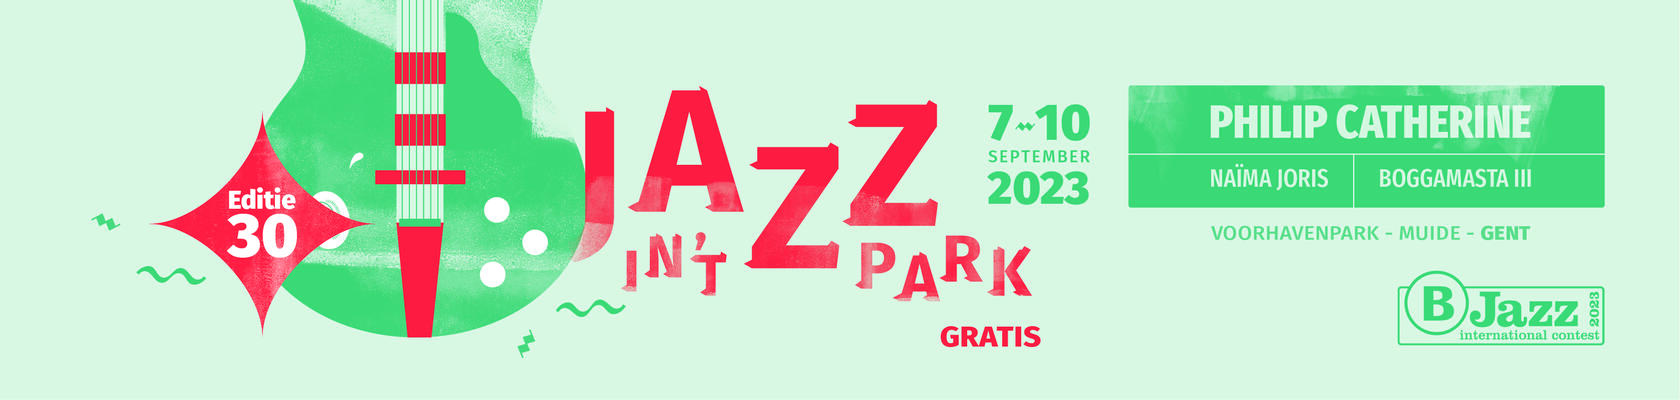 Jazz in 't Park